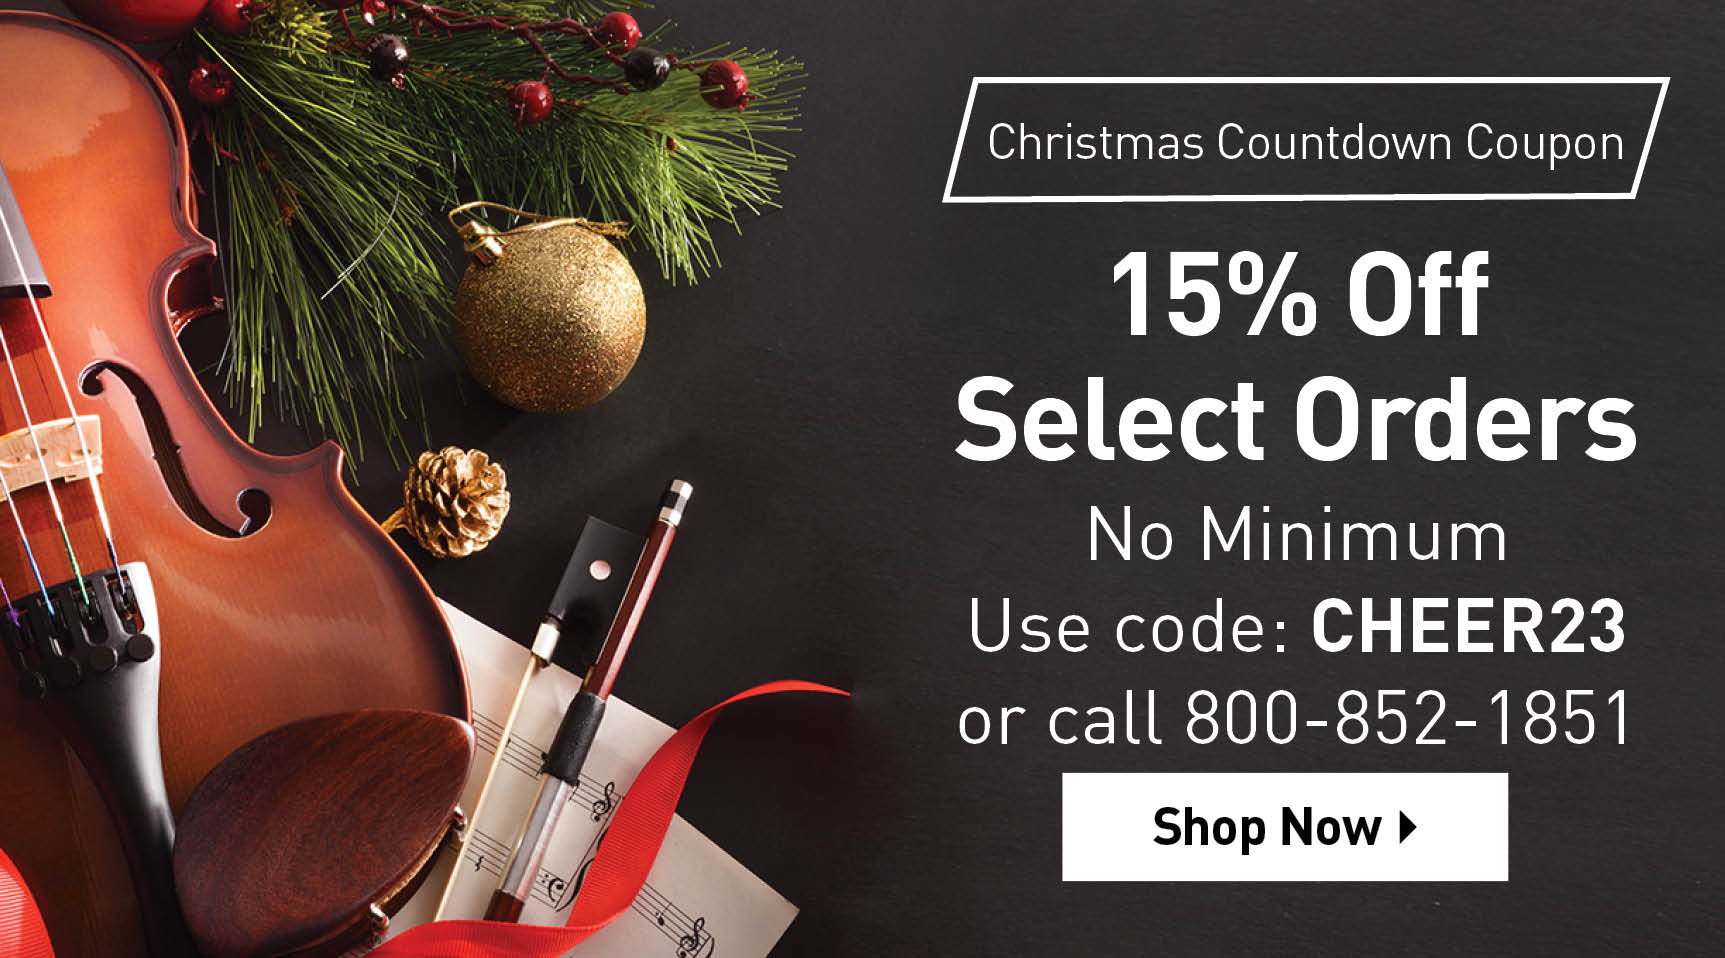 Christmas countdown coupon. 15% off select orders. No minimum. Use code: CHEER23 or call 800-852-1851